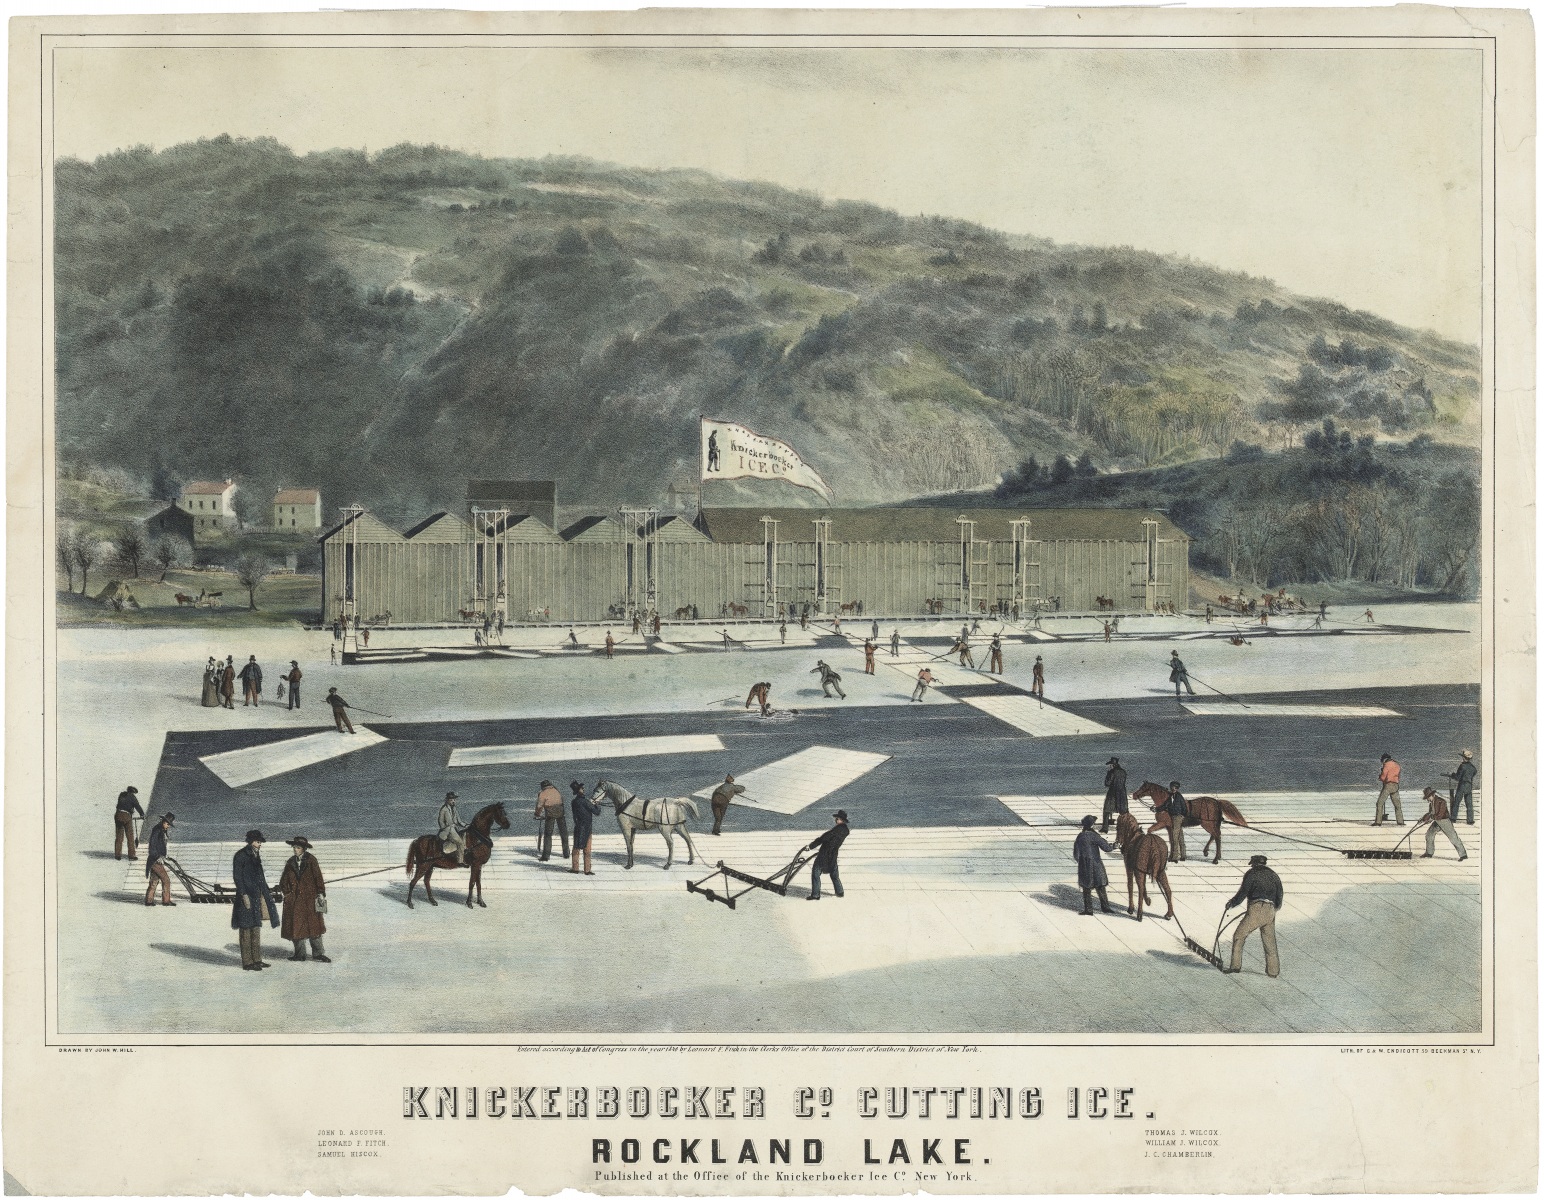 Knickerbocker Co. Cutting Ice. Rockland Lake, 1846